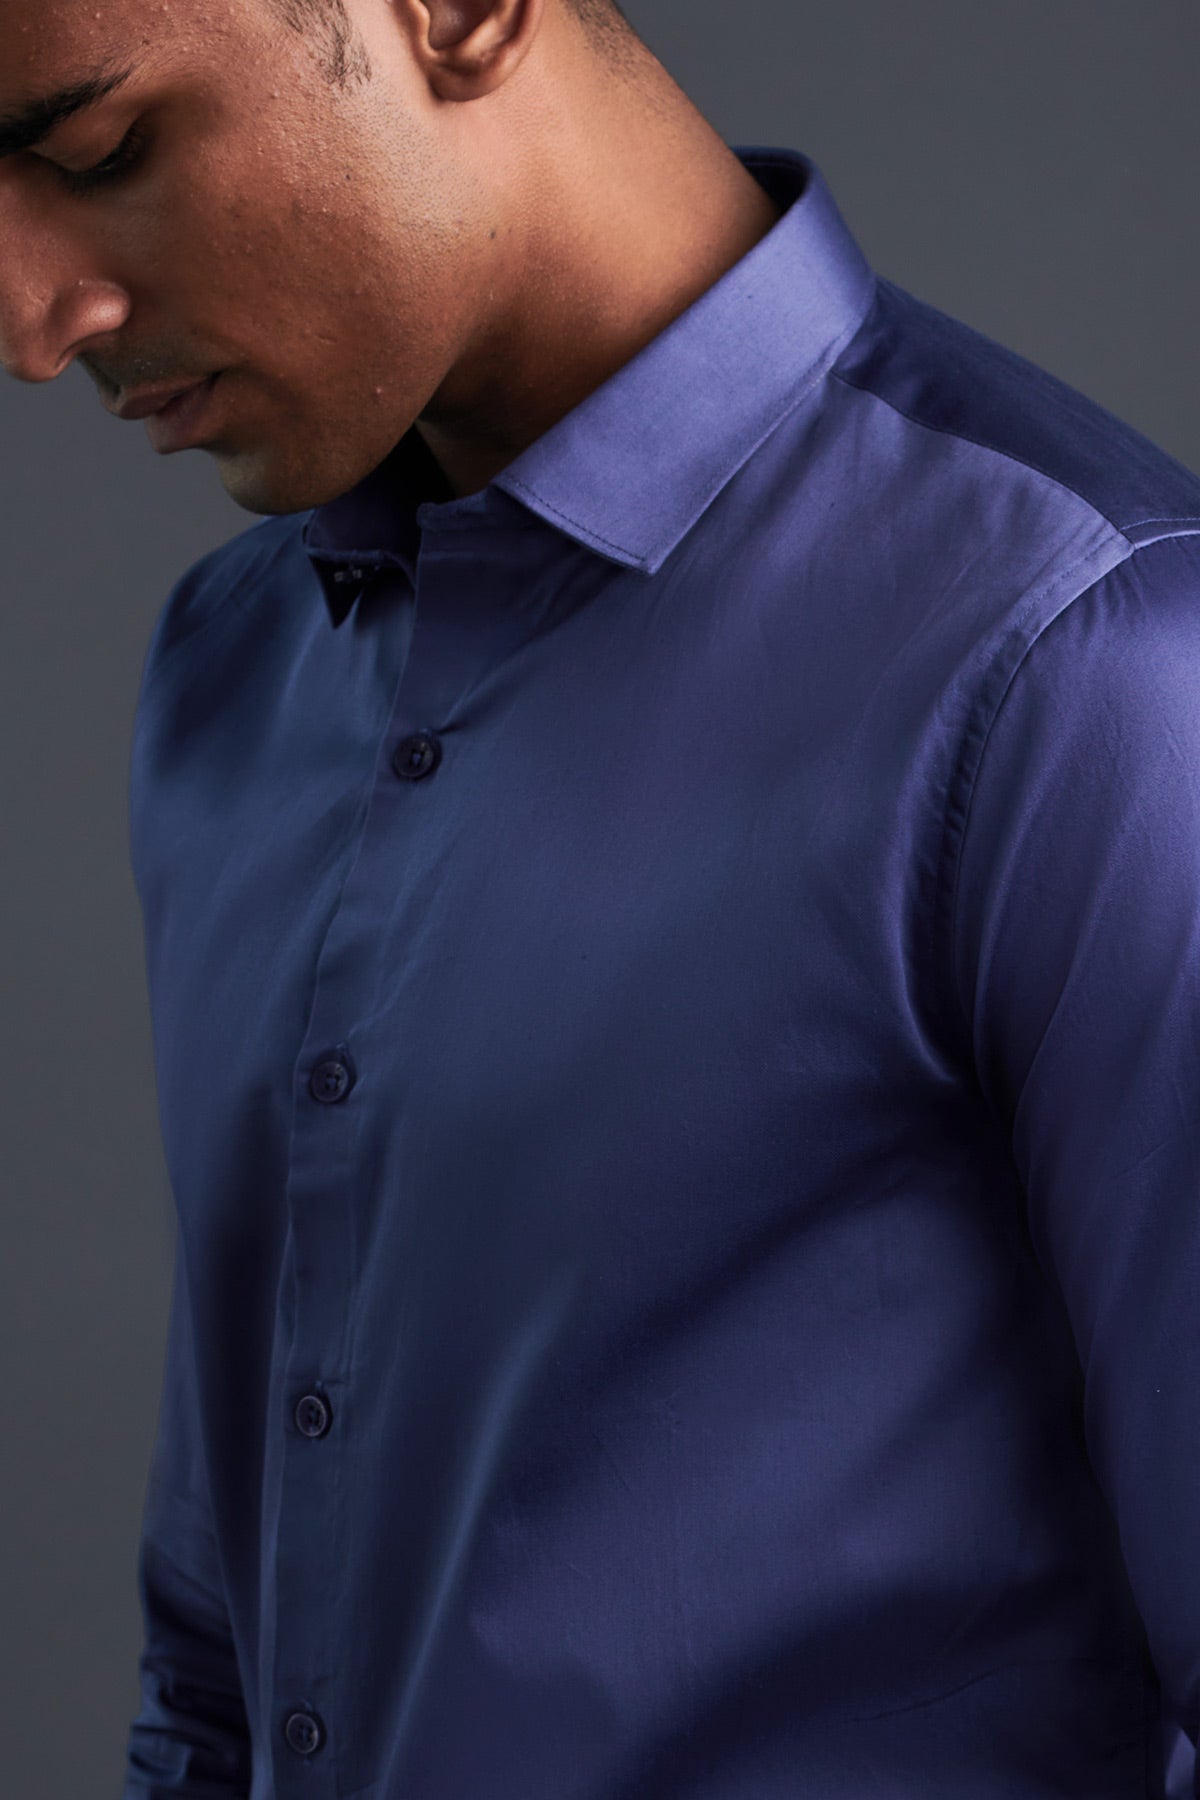 Buy Navy Blue Classic Shirt For Men's Online